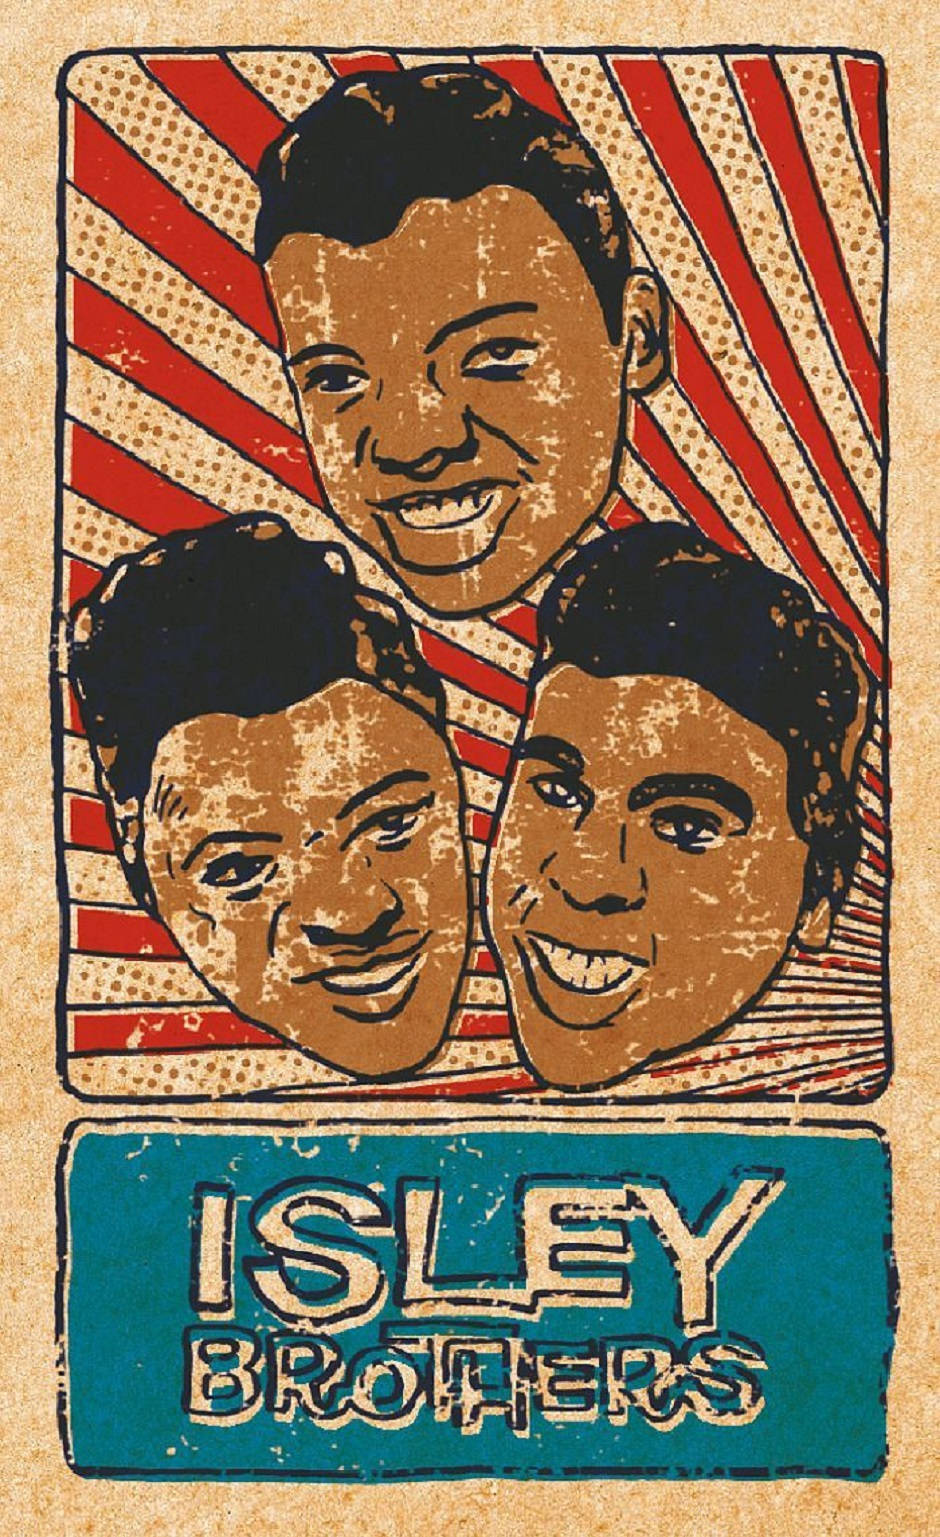 Isleybrothers Affisch Illustration. Wallpaper